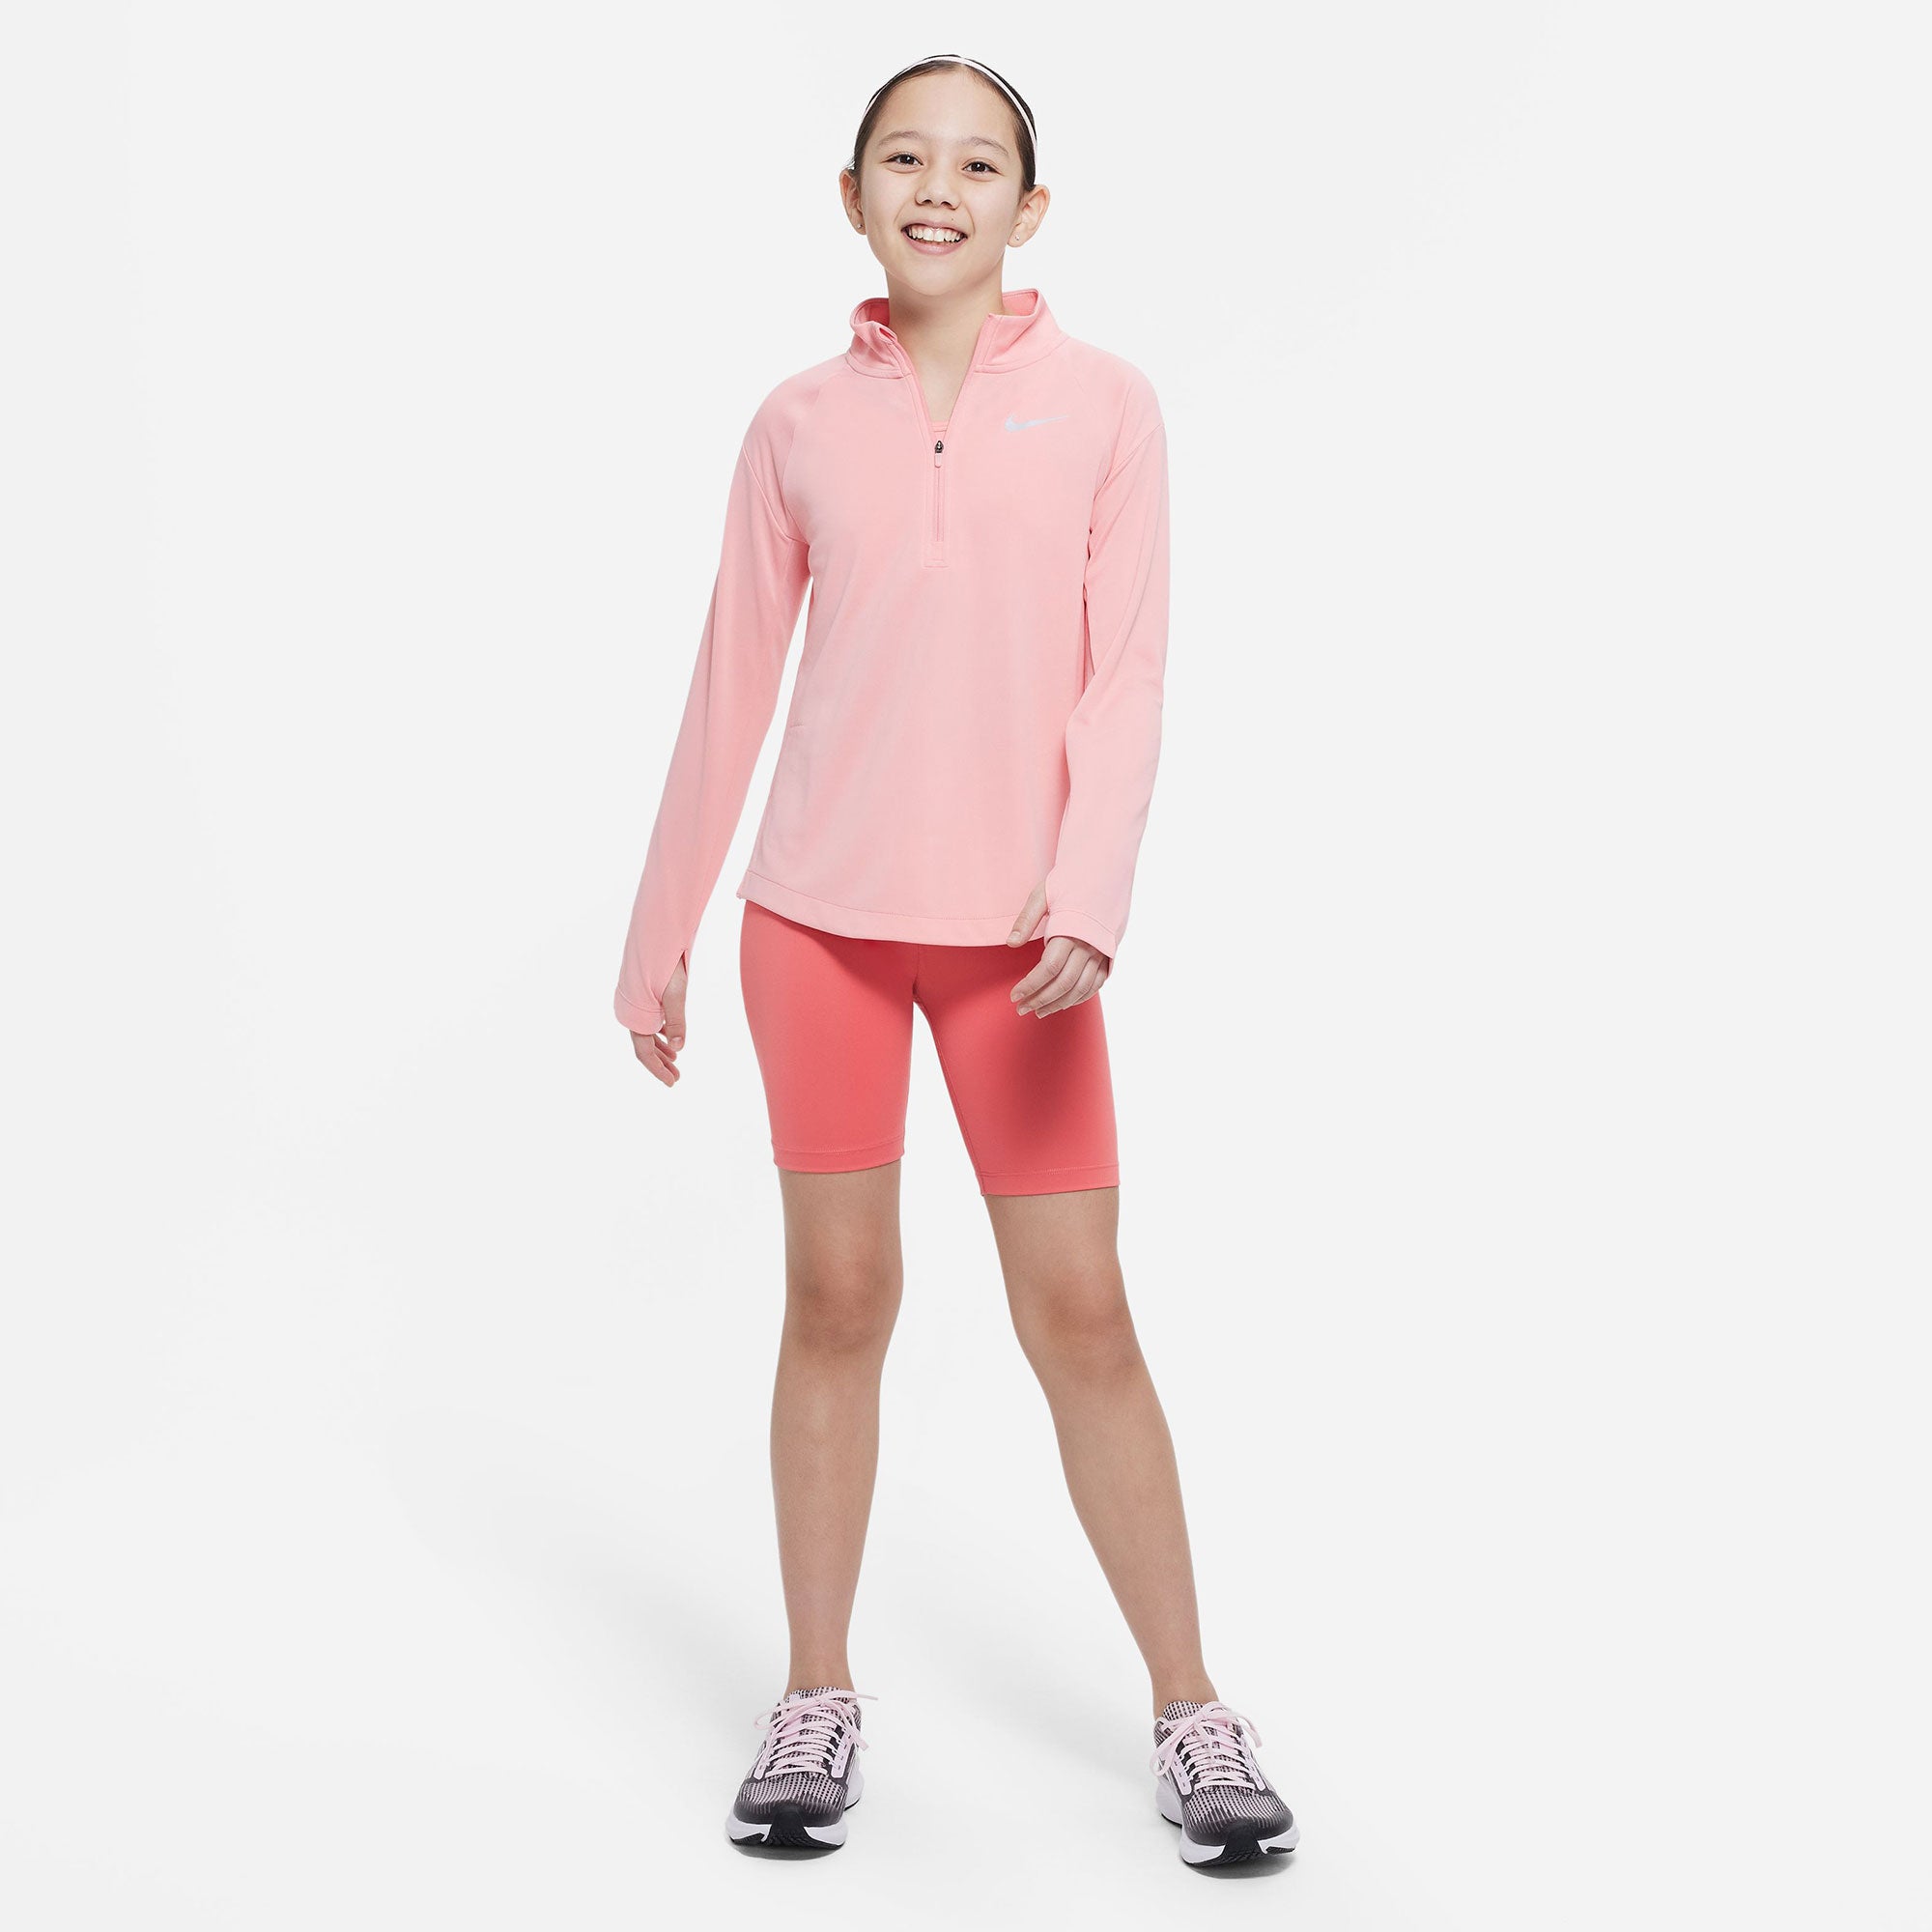 Nike Dri-FIT Girls' Long-Sleeve Top Pink (6)